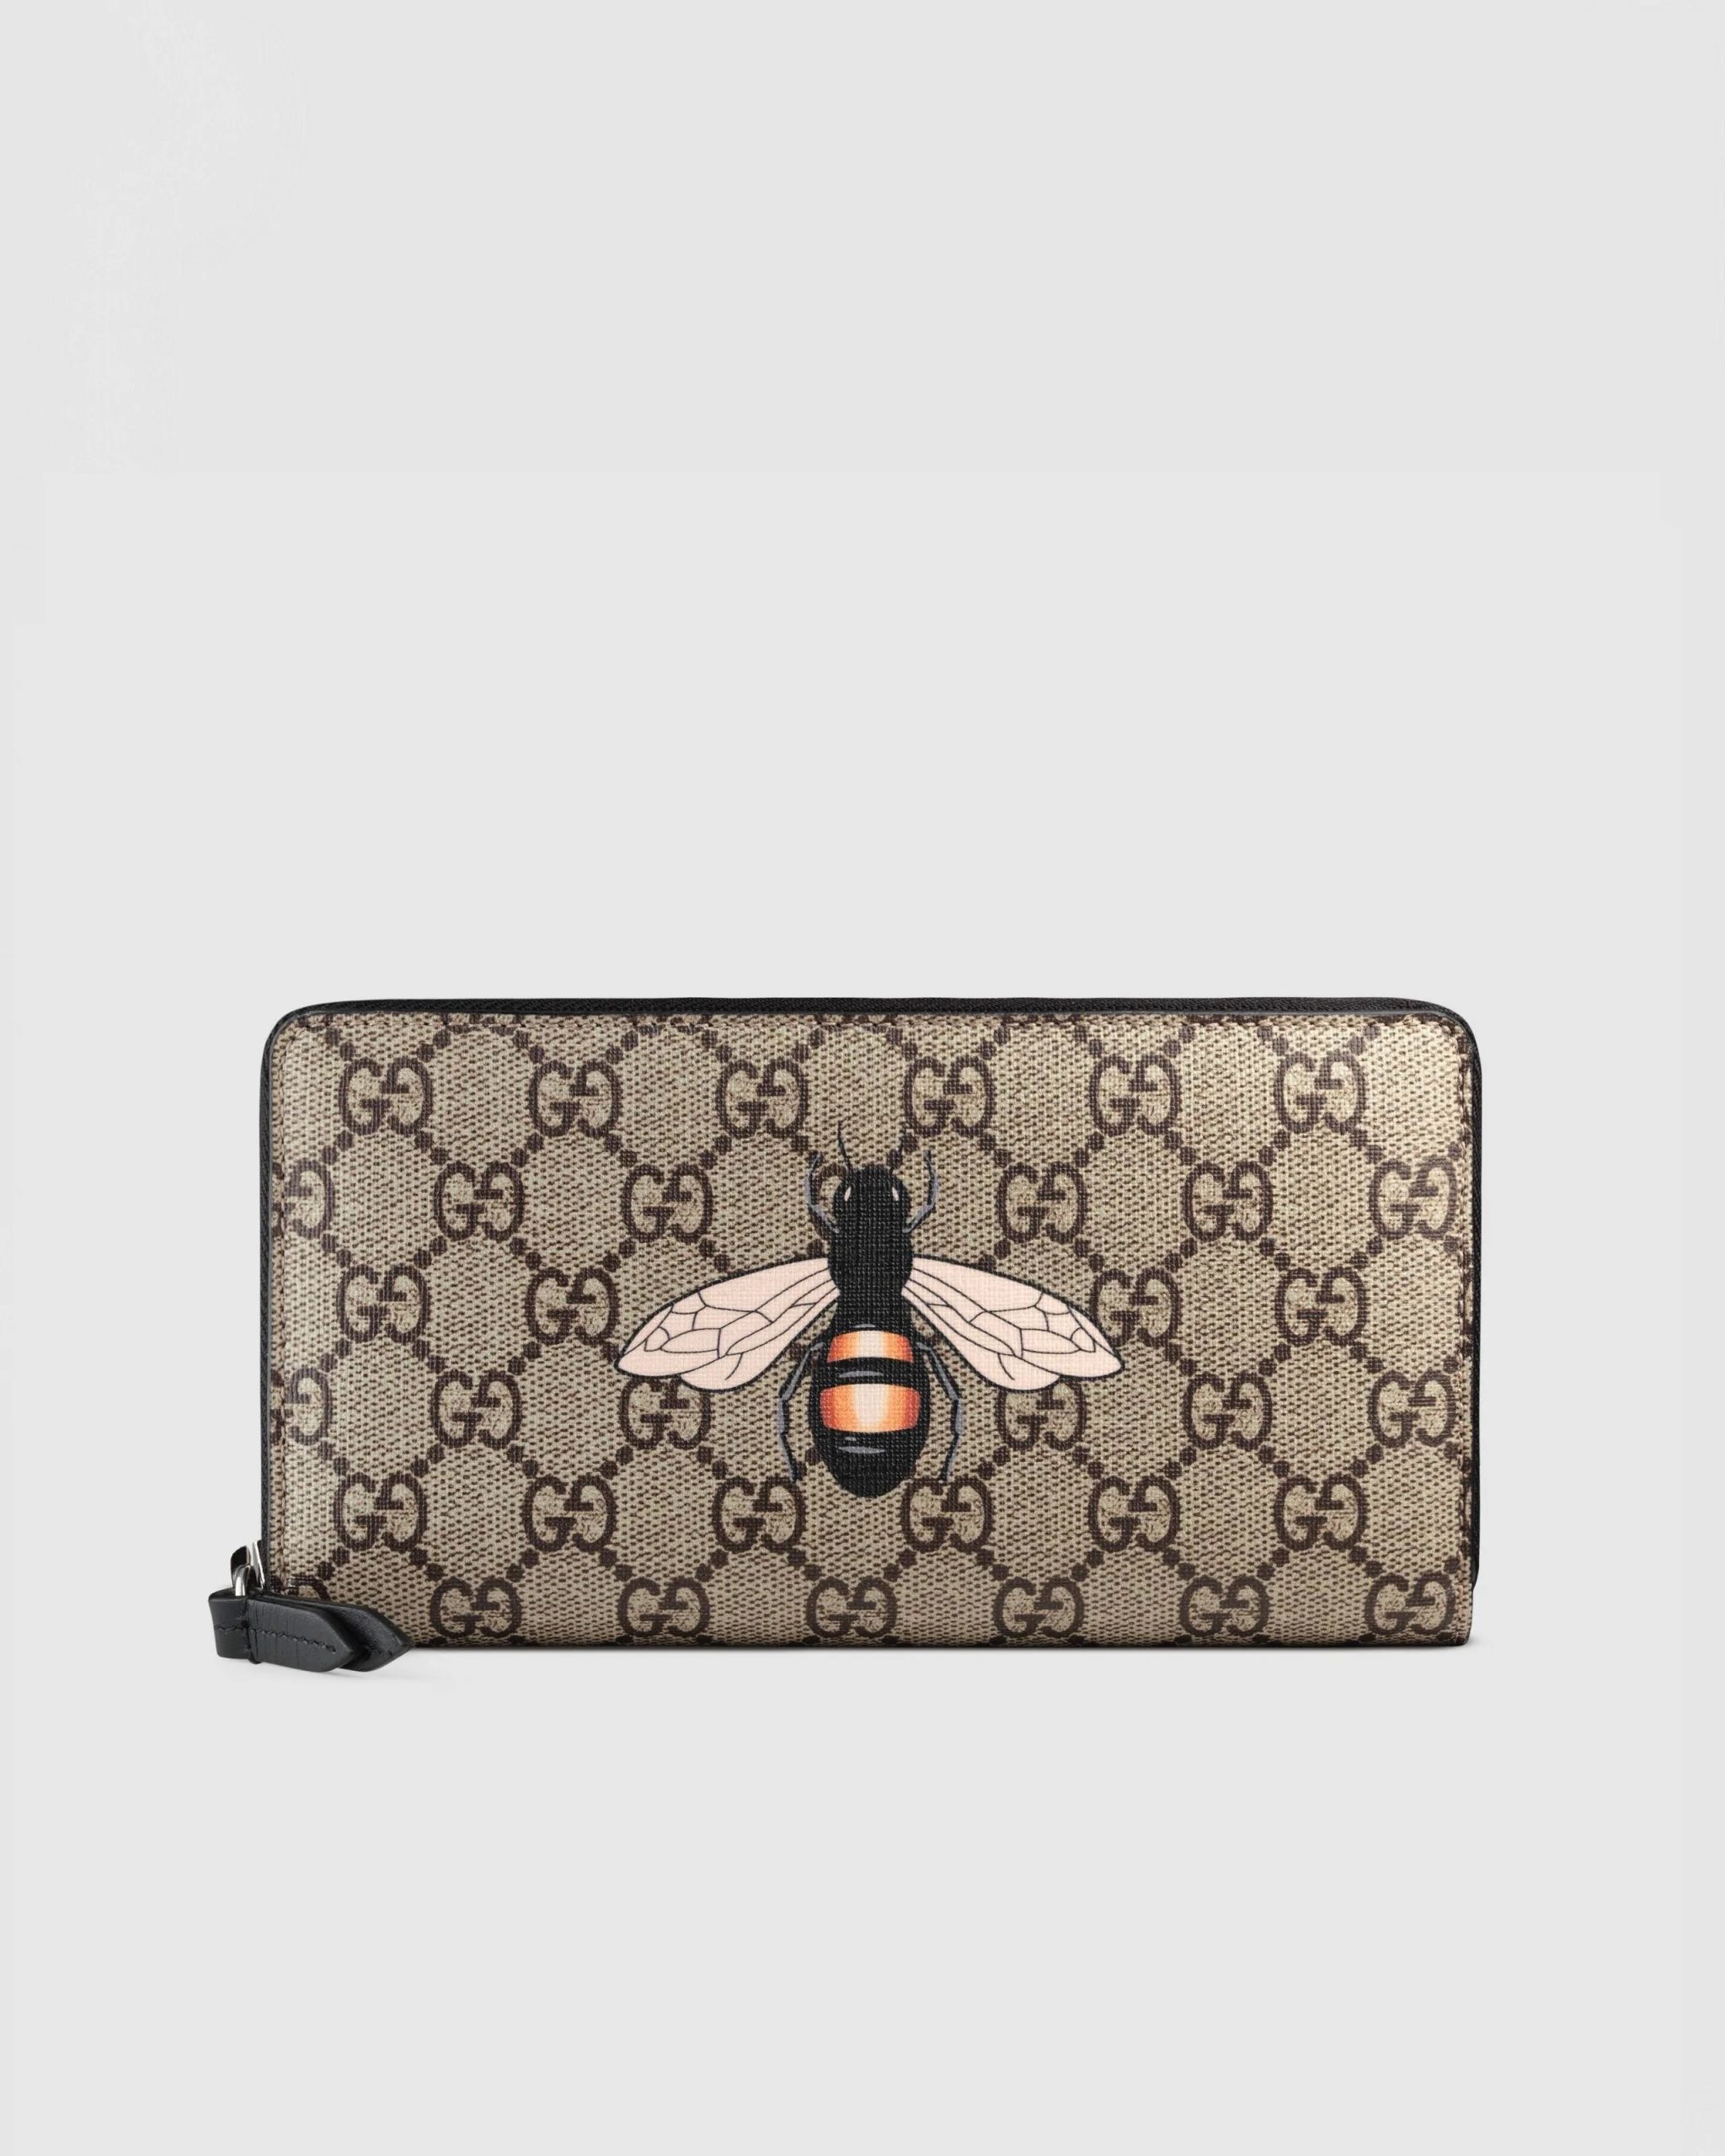 Gucci Bee print GG Supreme Zip Around Wallet